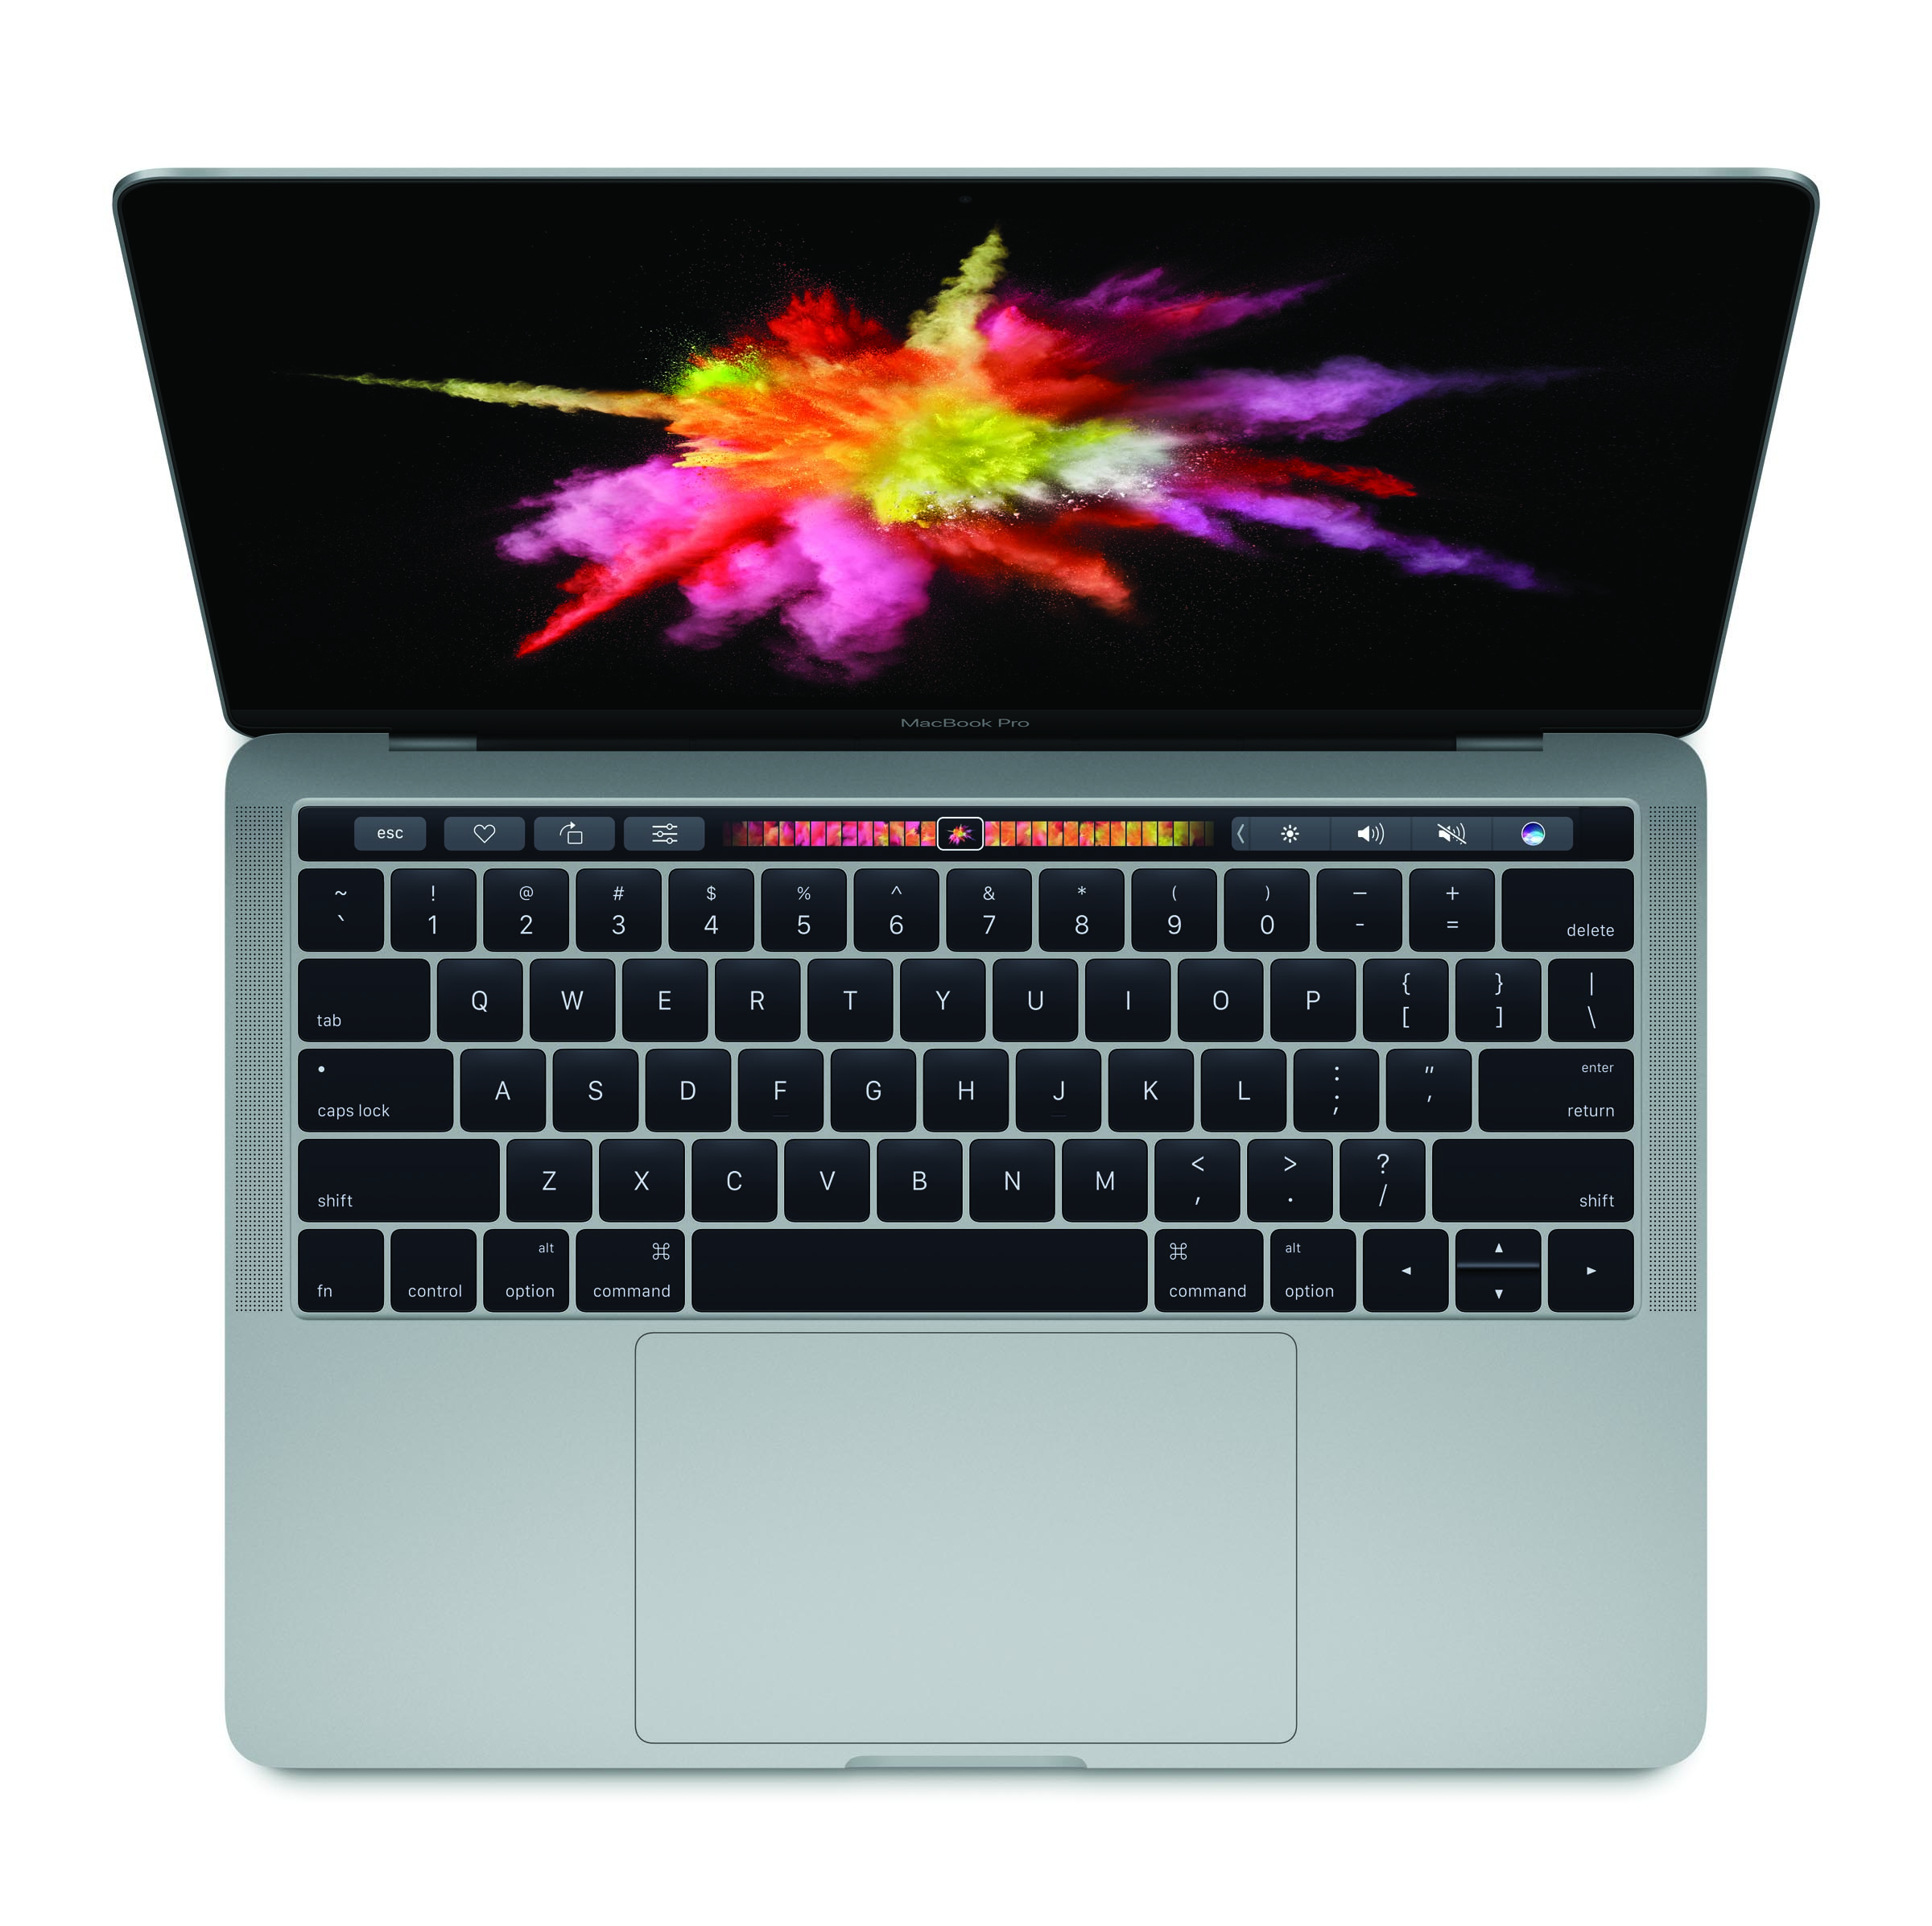 MacBookPro 2016 Two Thunderbolt ports